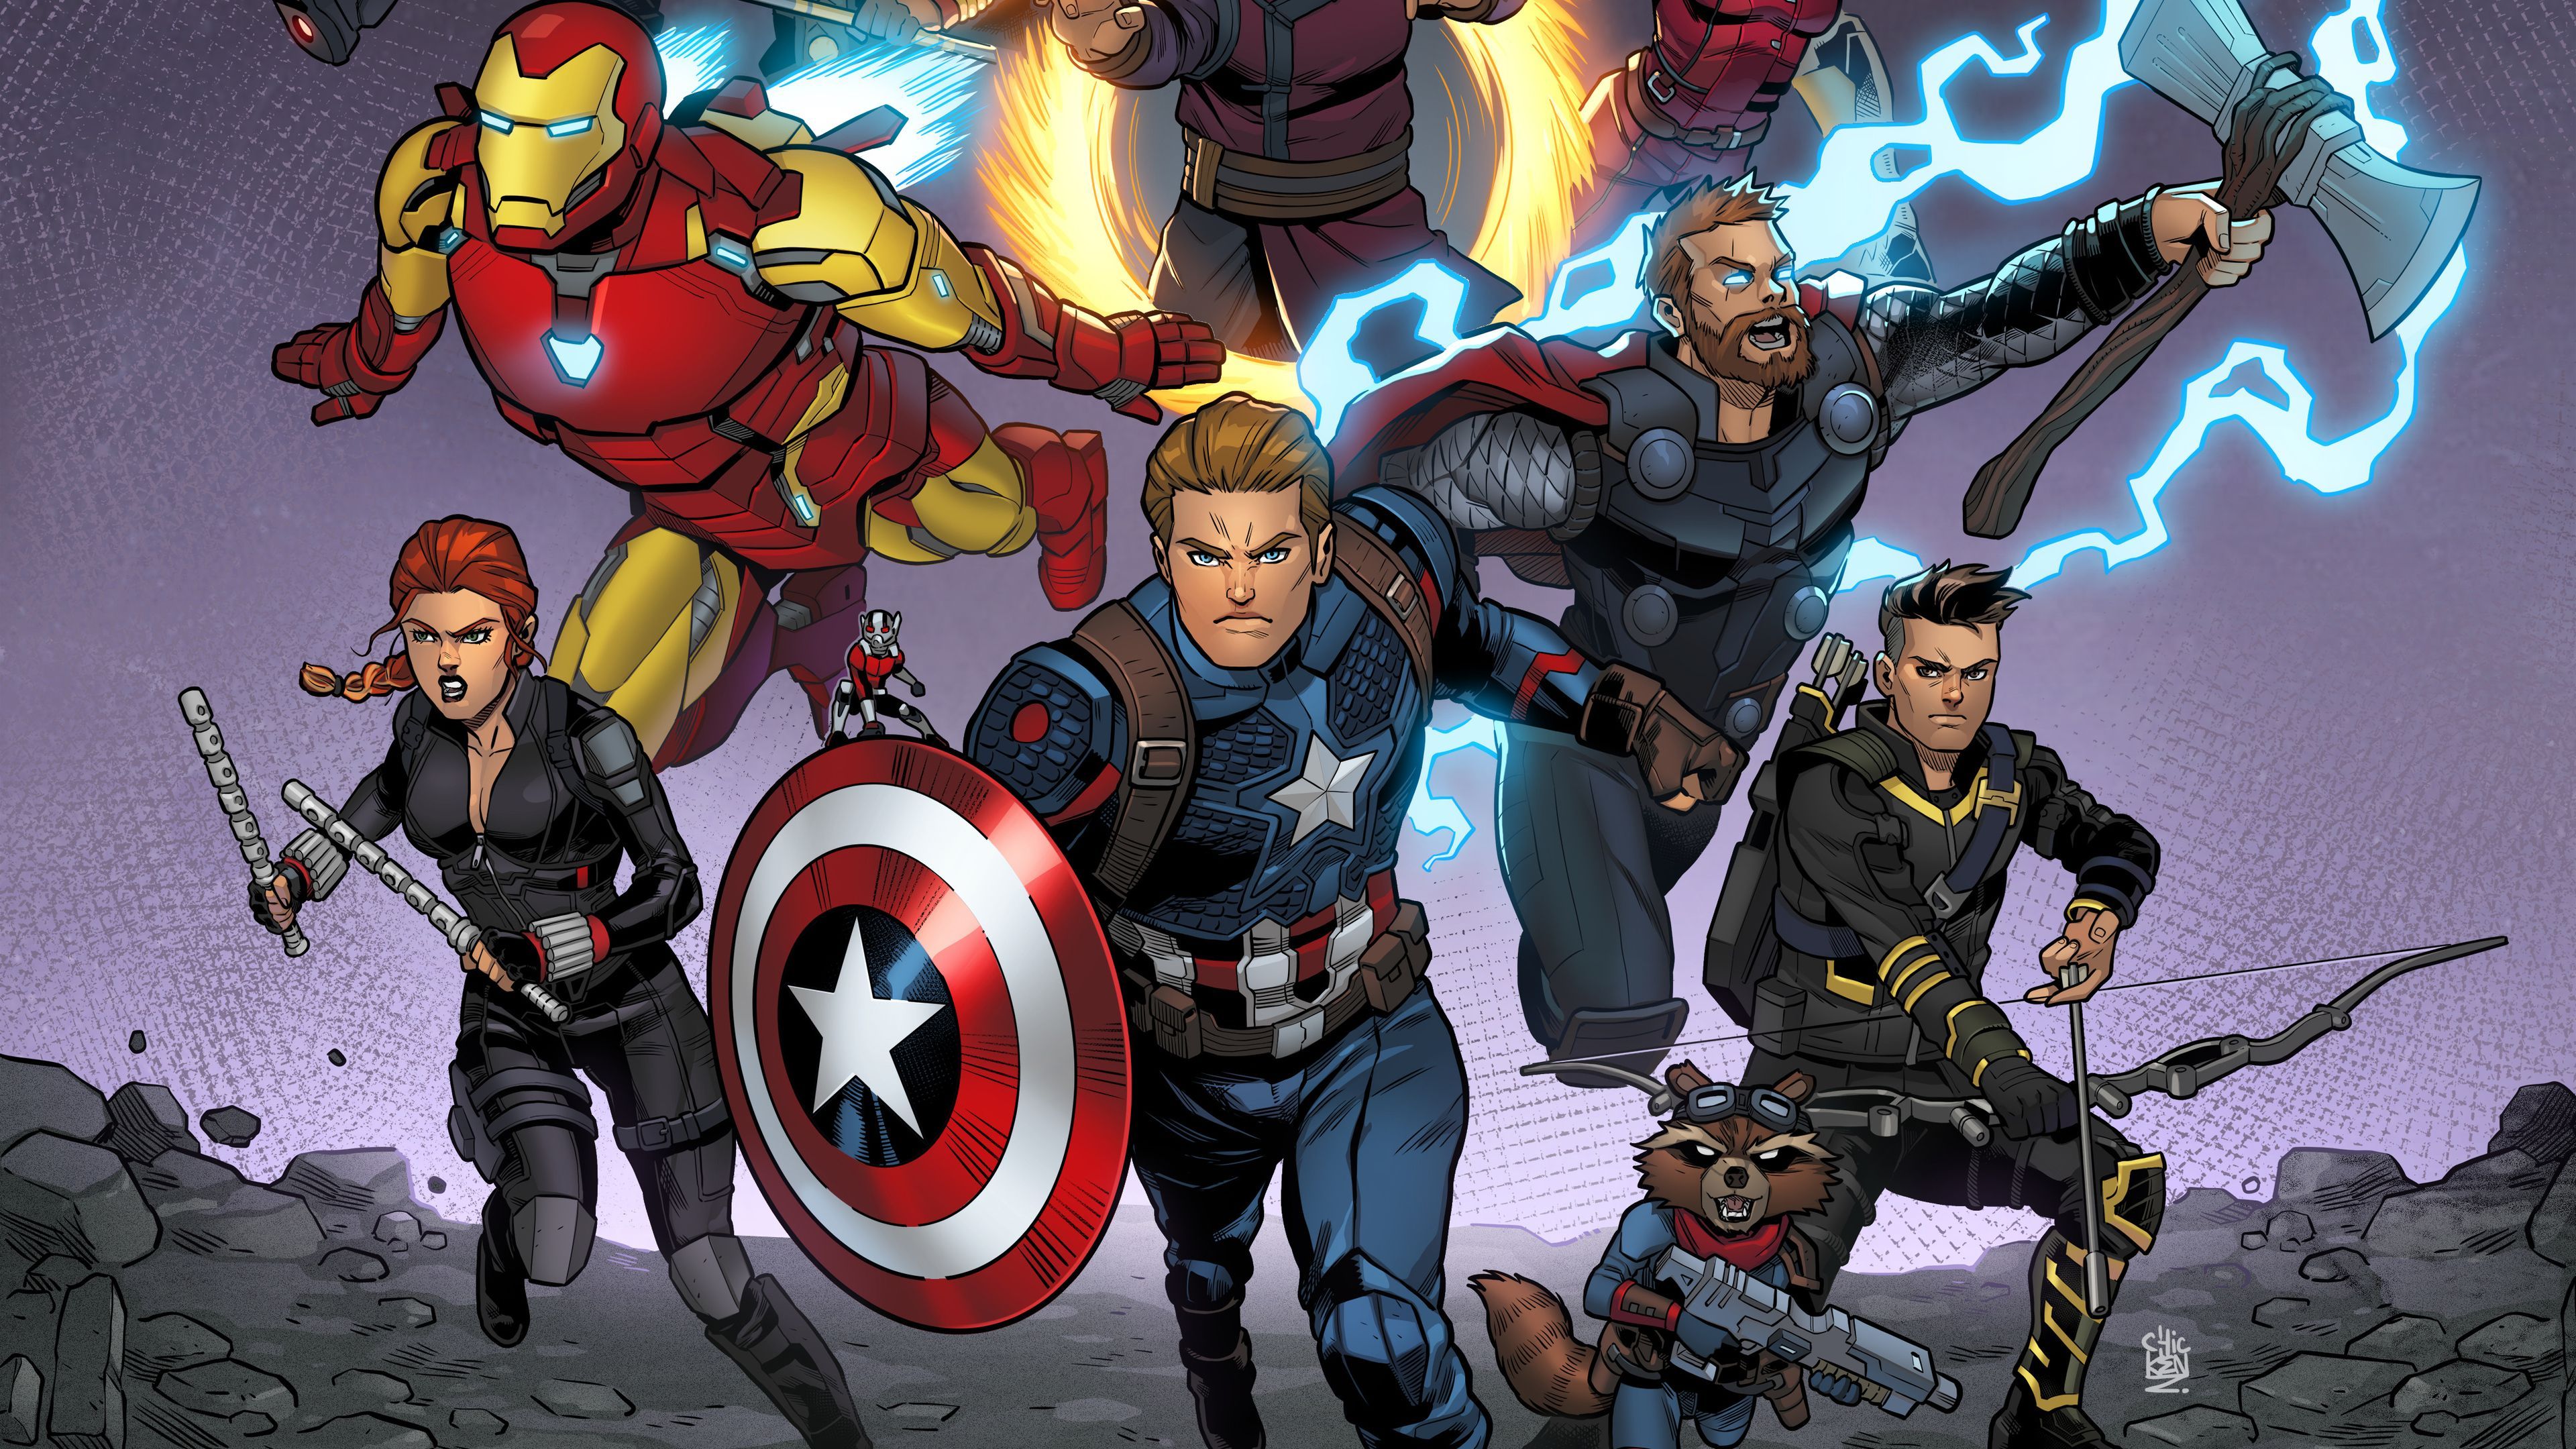 Avengers Endgame Final Fight superheroes wallpaper, movies wallpaper, hd- wallpaper, wallpaper, ave. Beautiful wallpaper, Movie wallpaper, Artwork